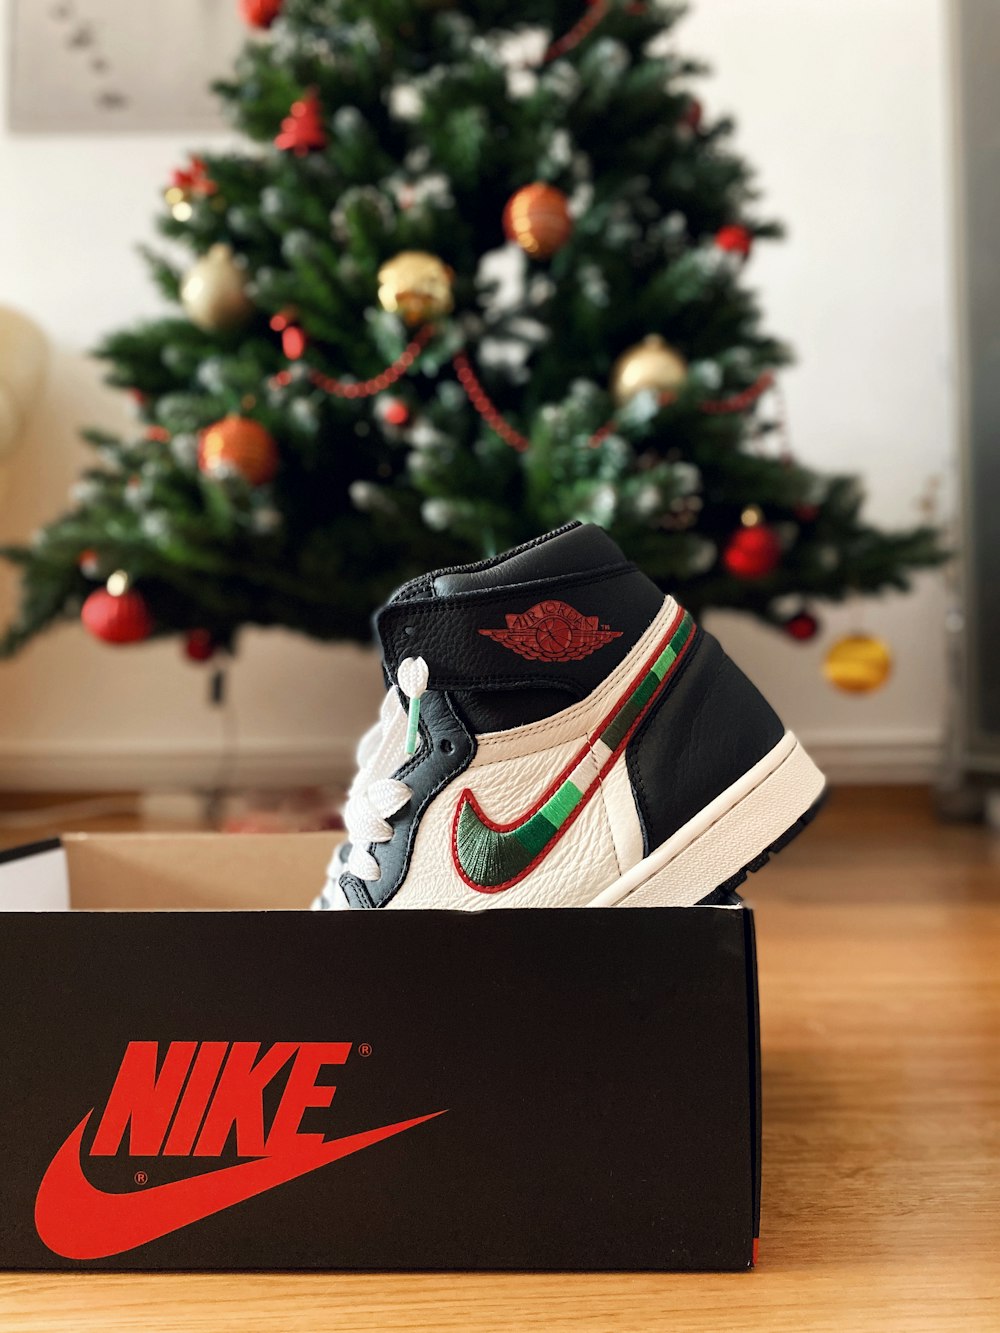 Nike high-top shoe in box near Christmas tree